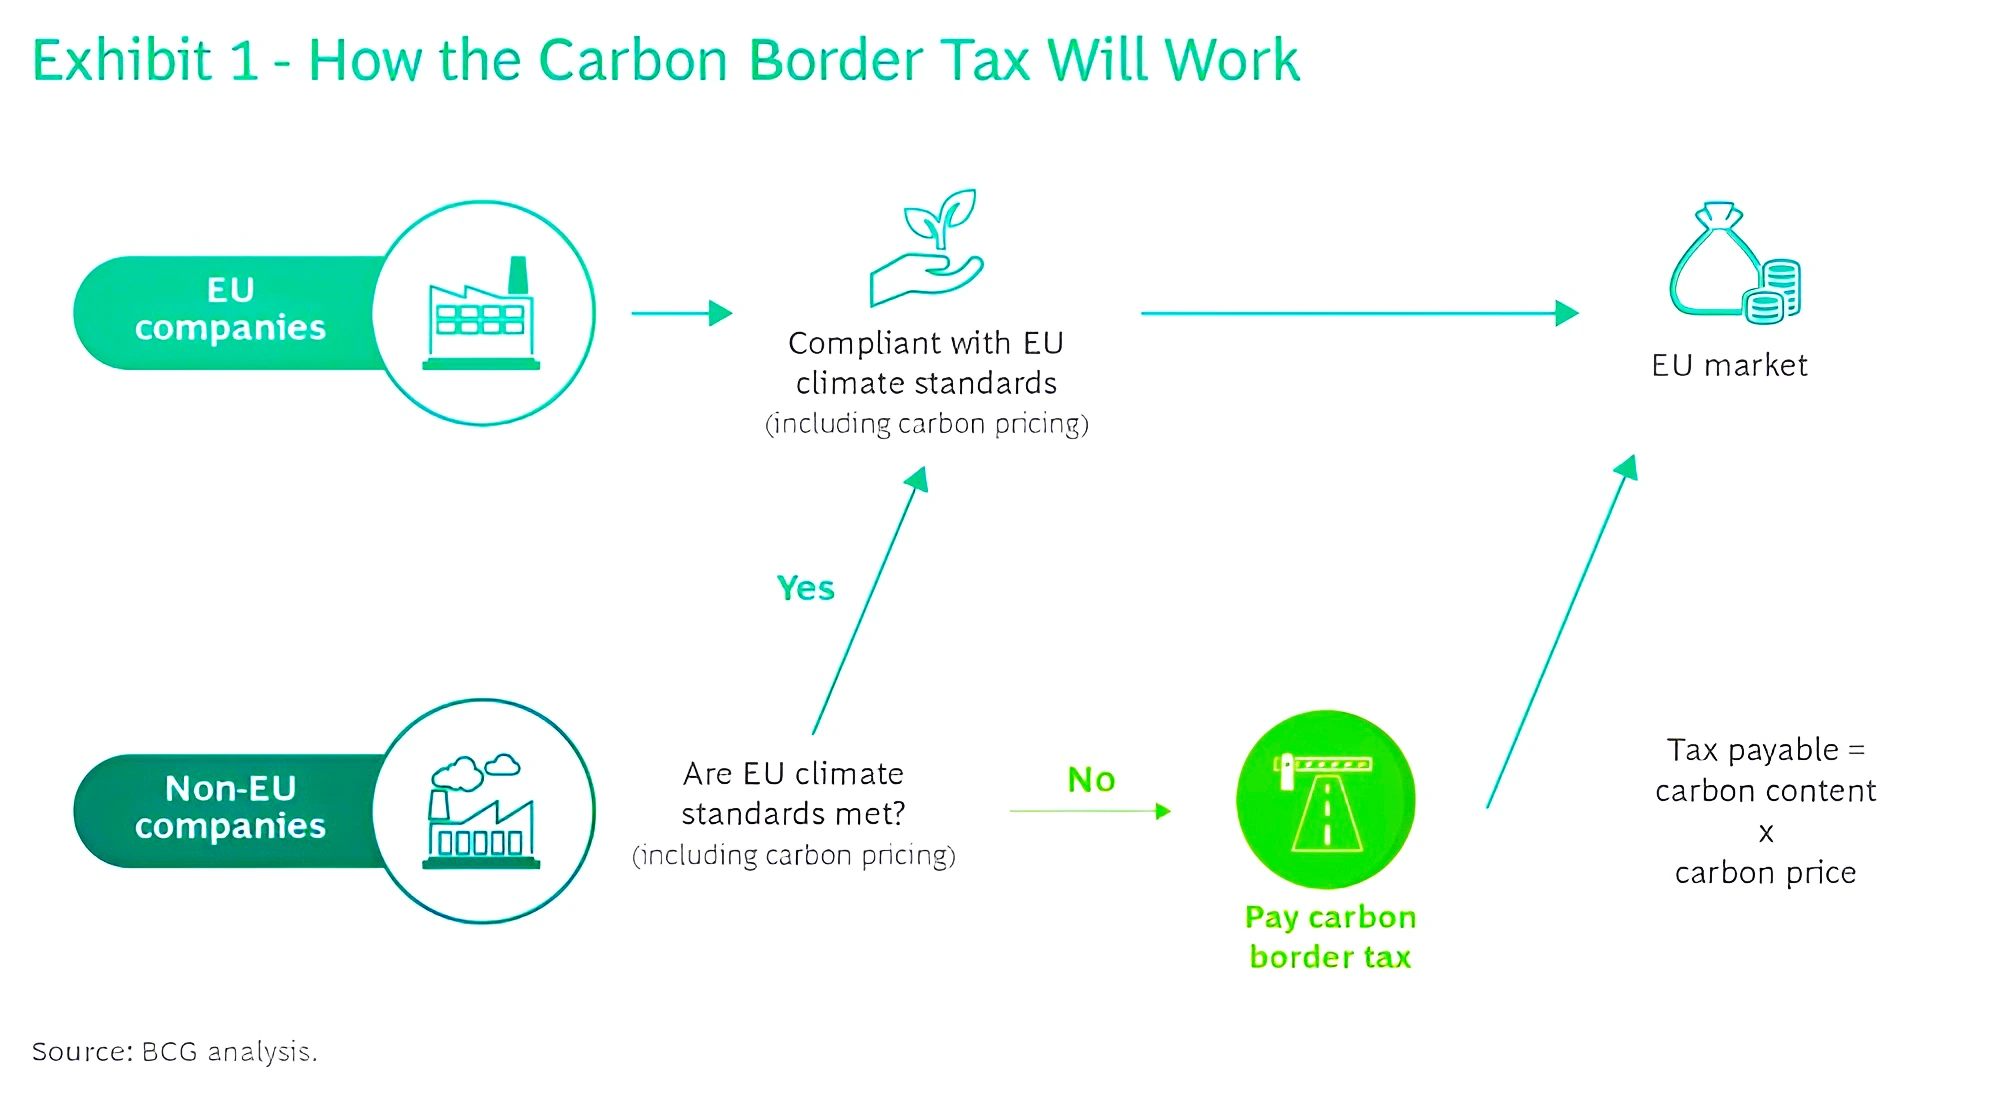 Carbon Border Adjustment Mechanism